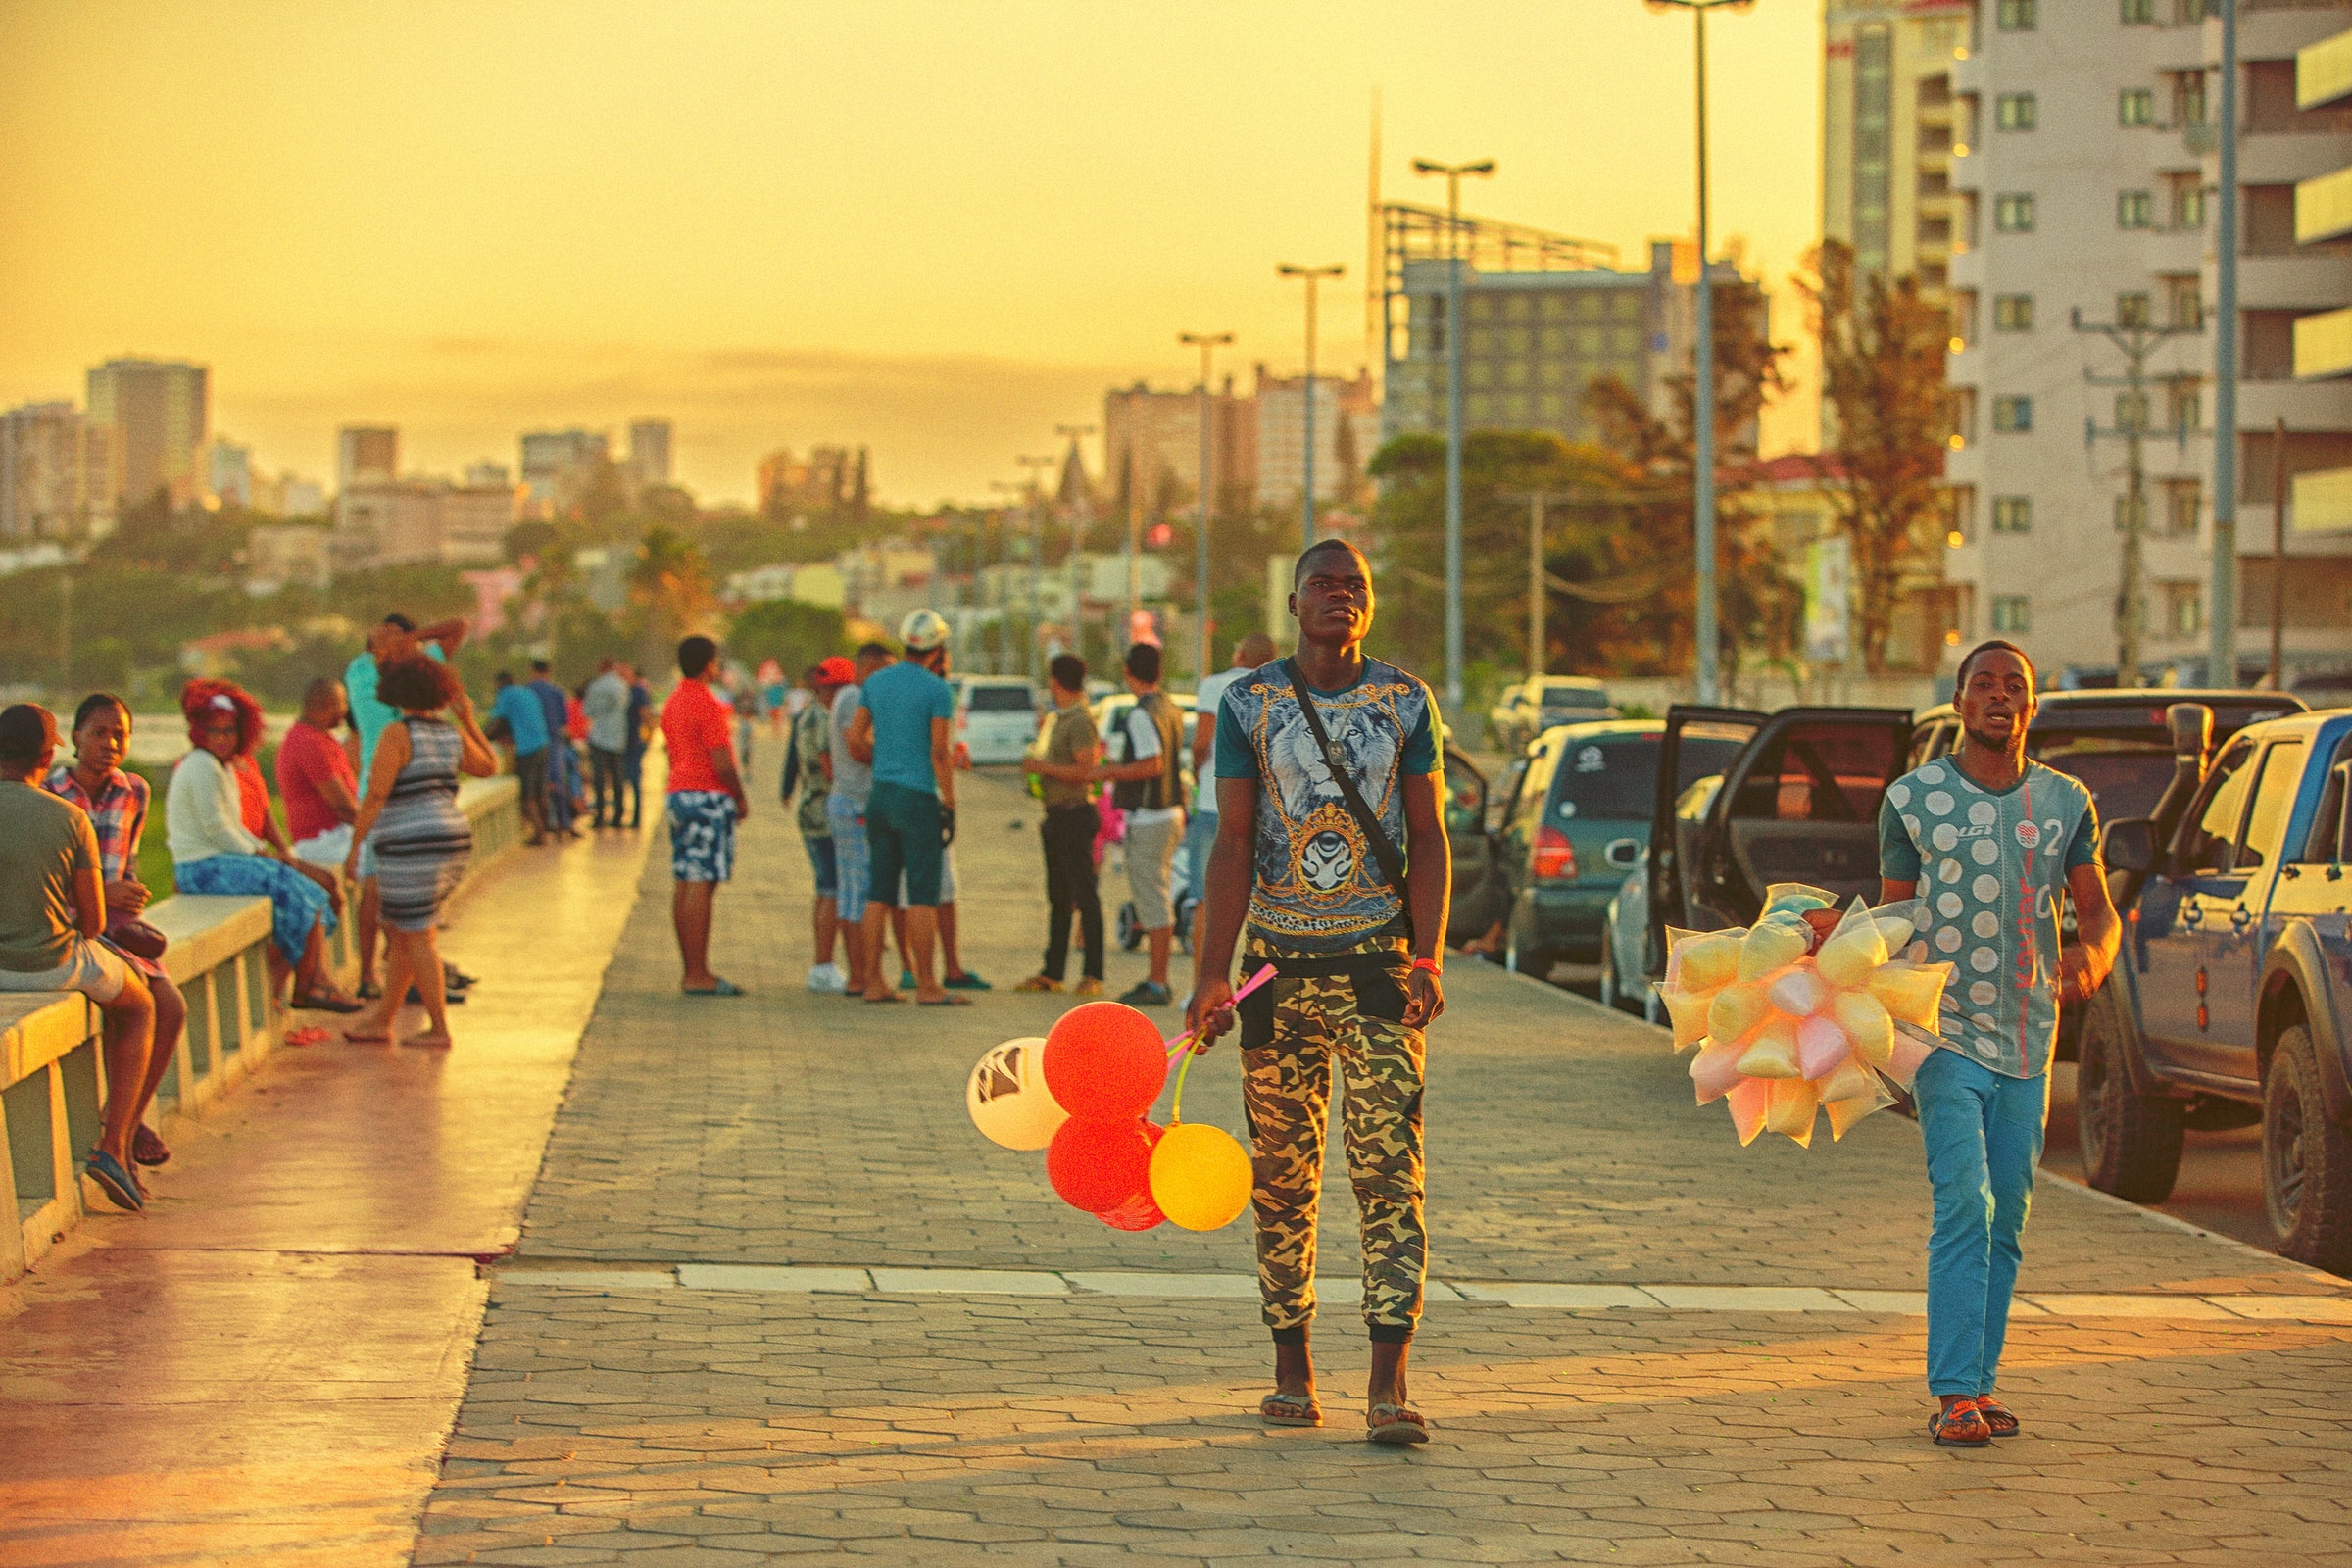 Image of market sellers working in Avenida da Marginal, Maputo, Mozambique 